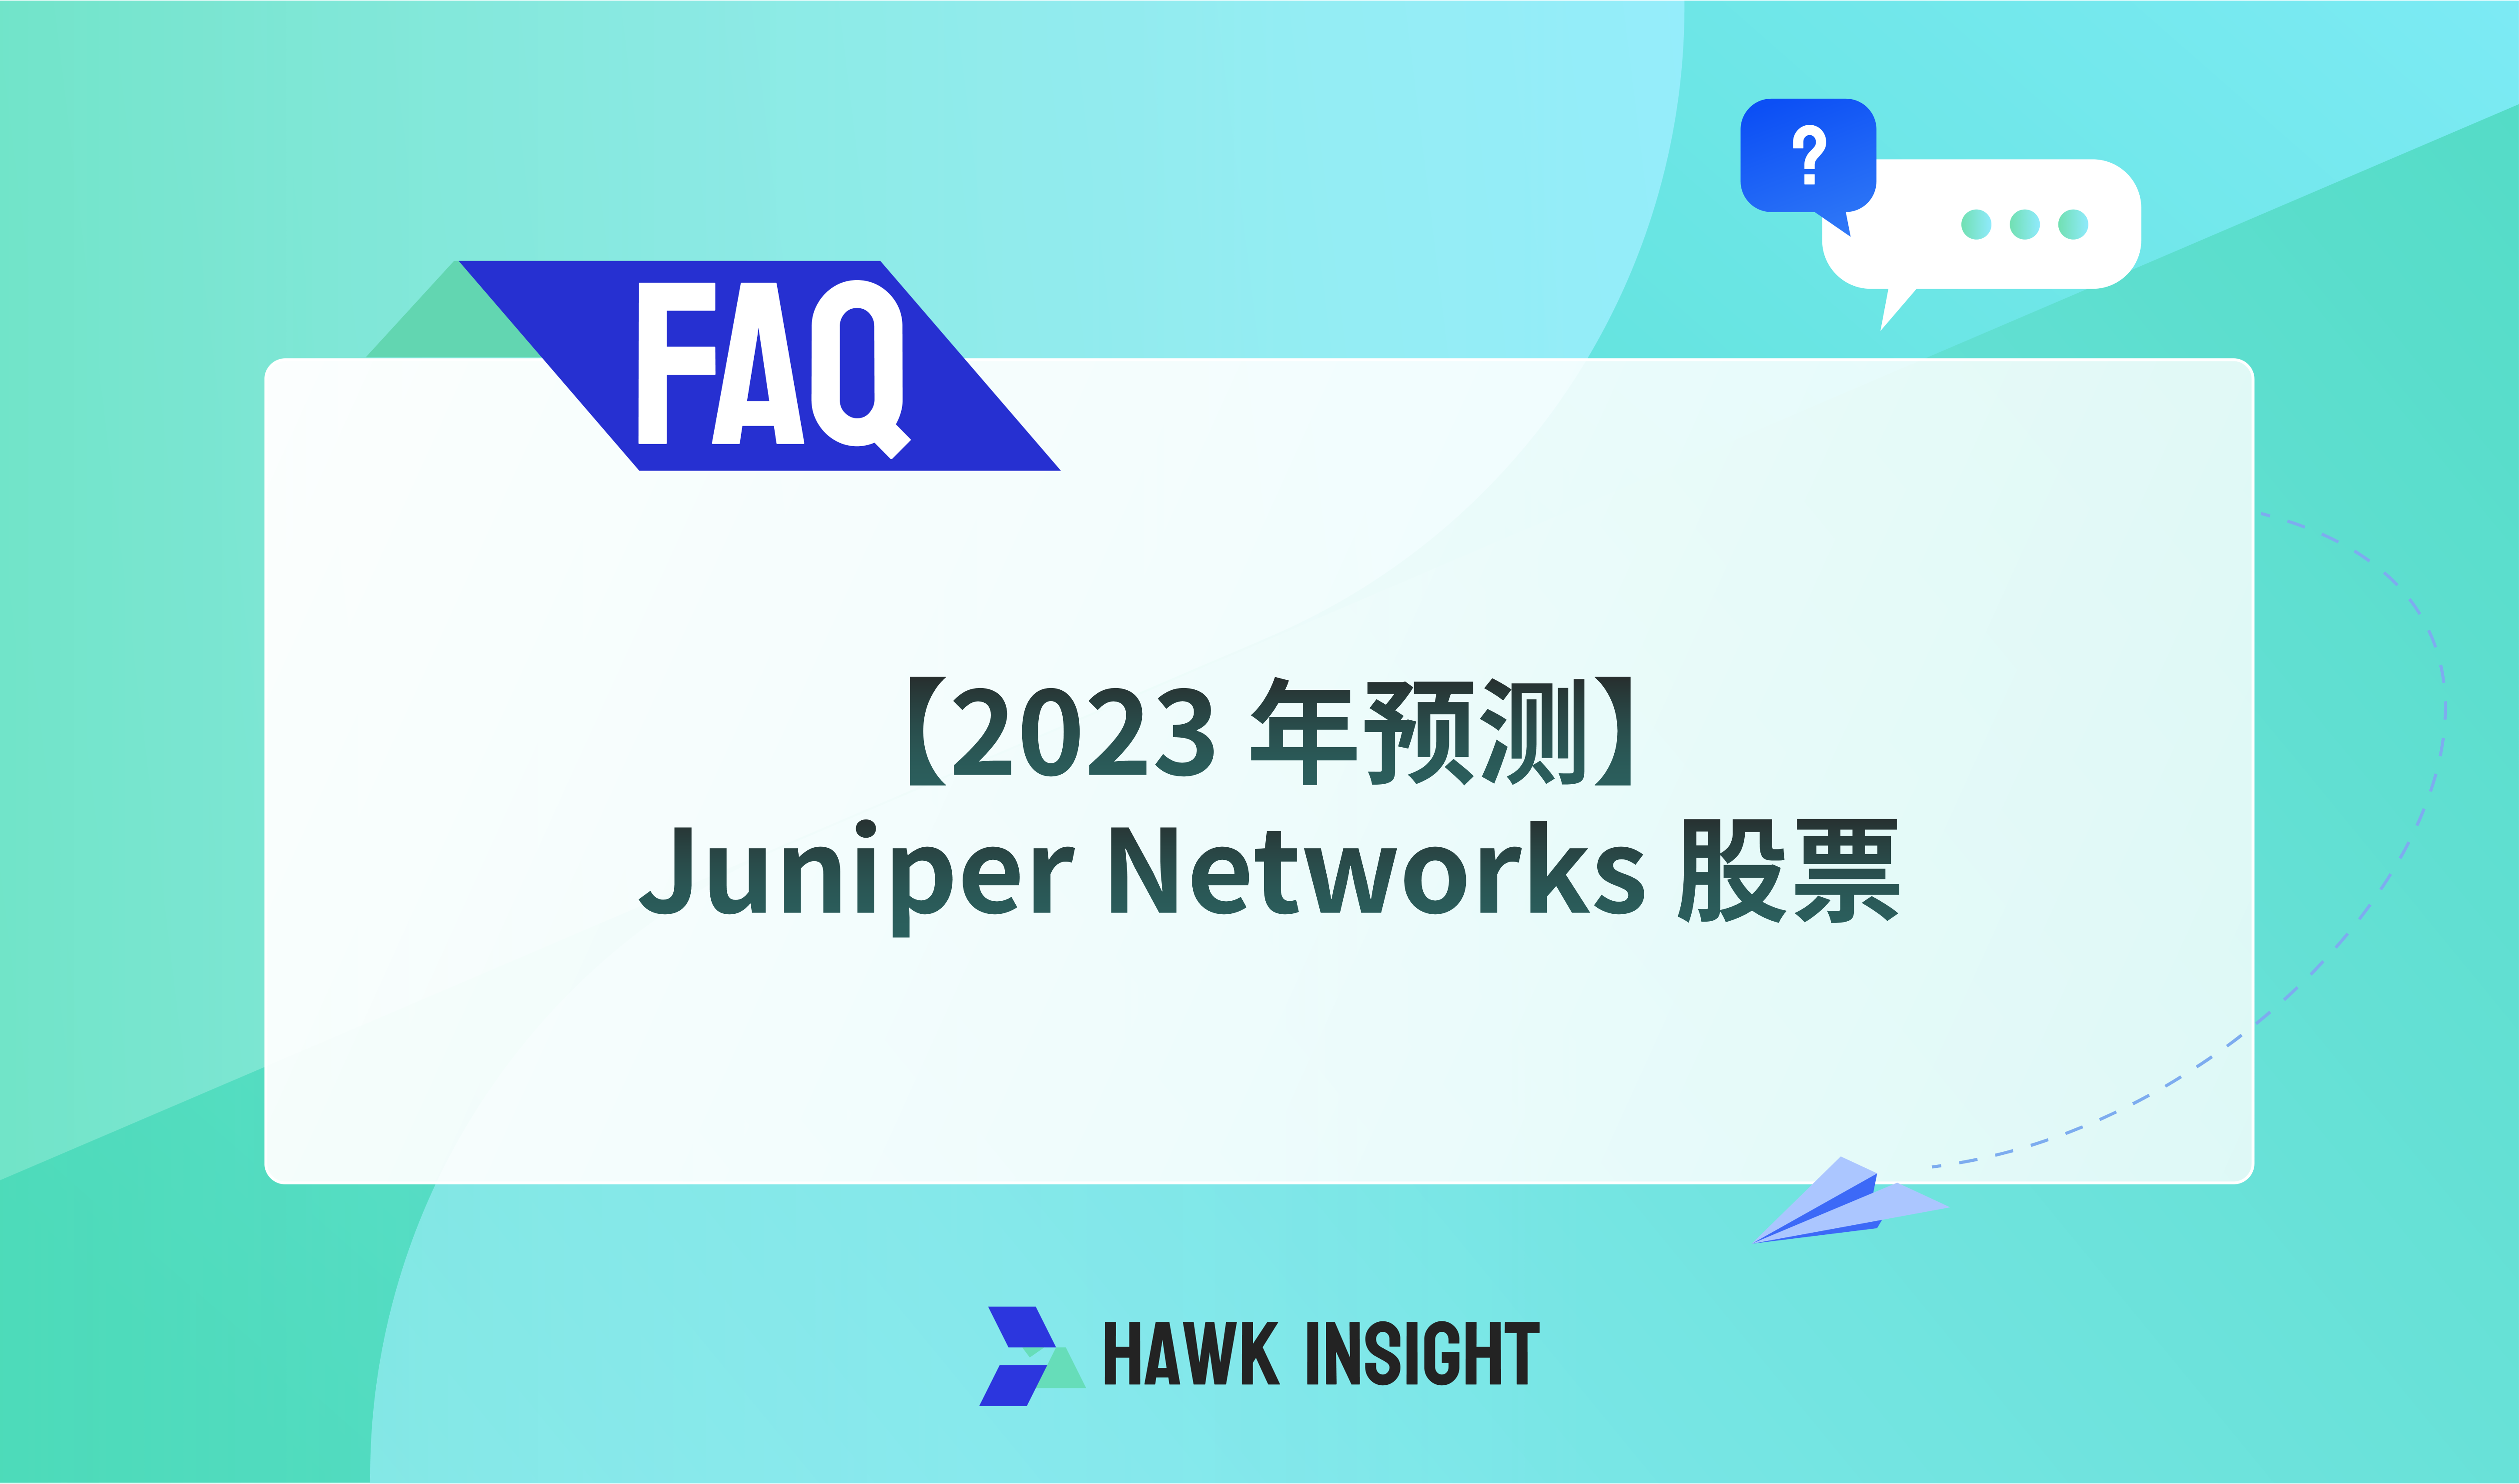 [2023 Forecast] Juniper Networks Stock